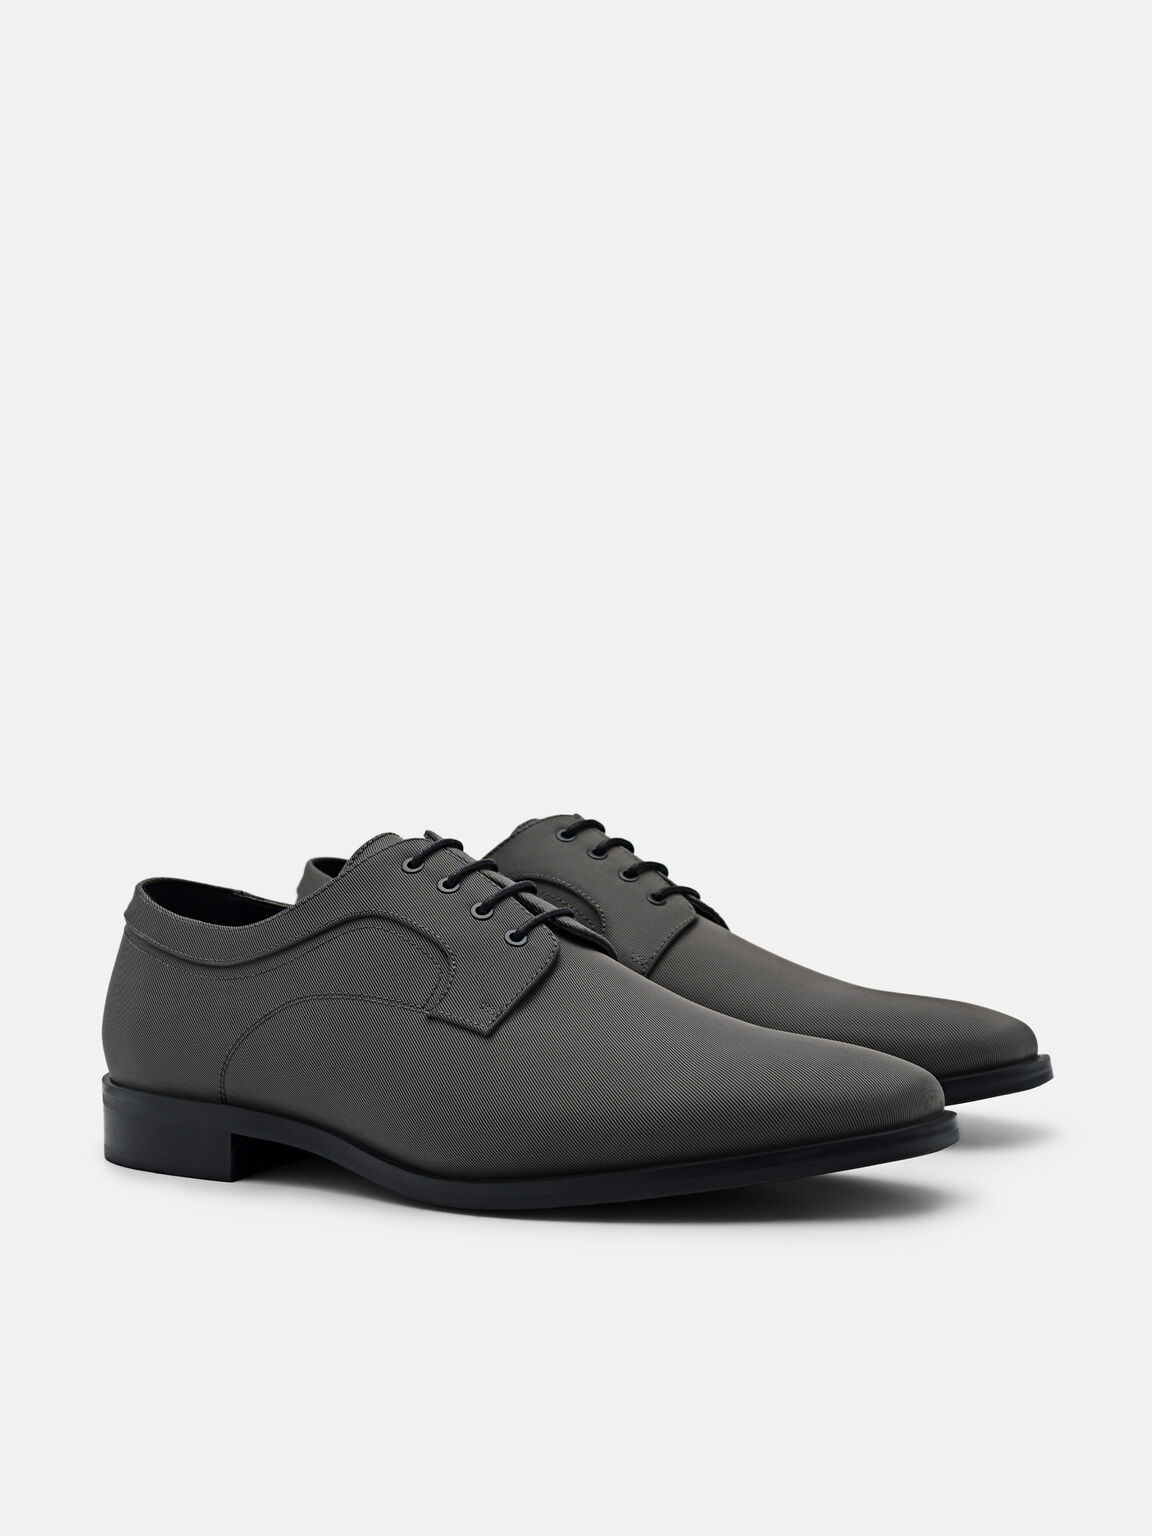 Nylon Derby Shoes, Dark Grey